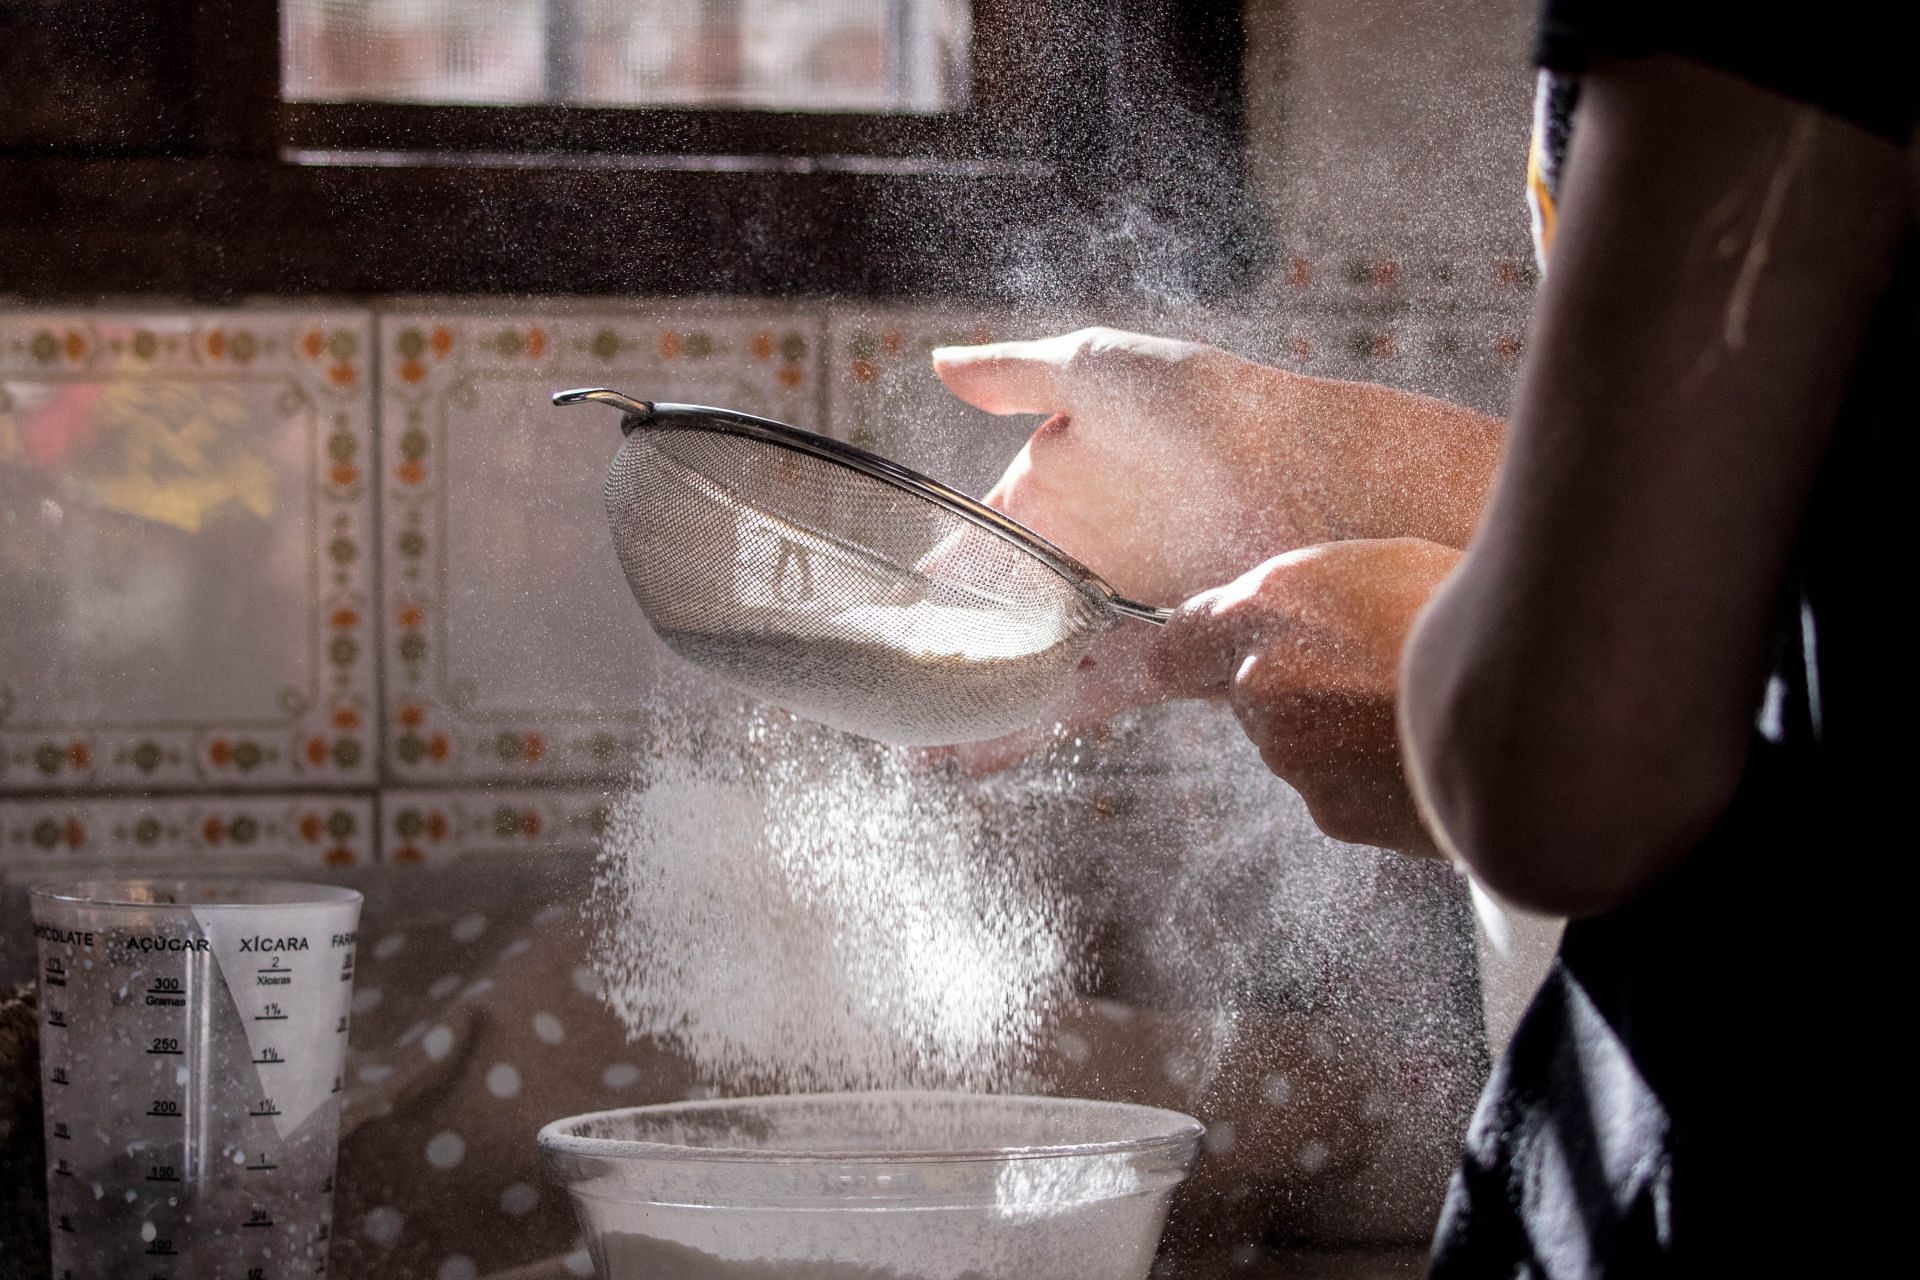 All-purpose flour has a few benefits. (Image via Unsplash/Sonia Nadales)